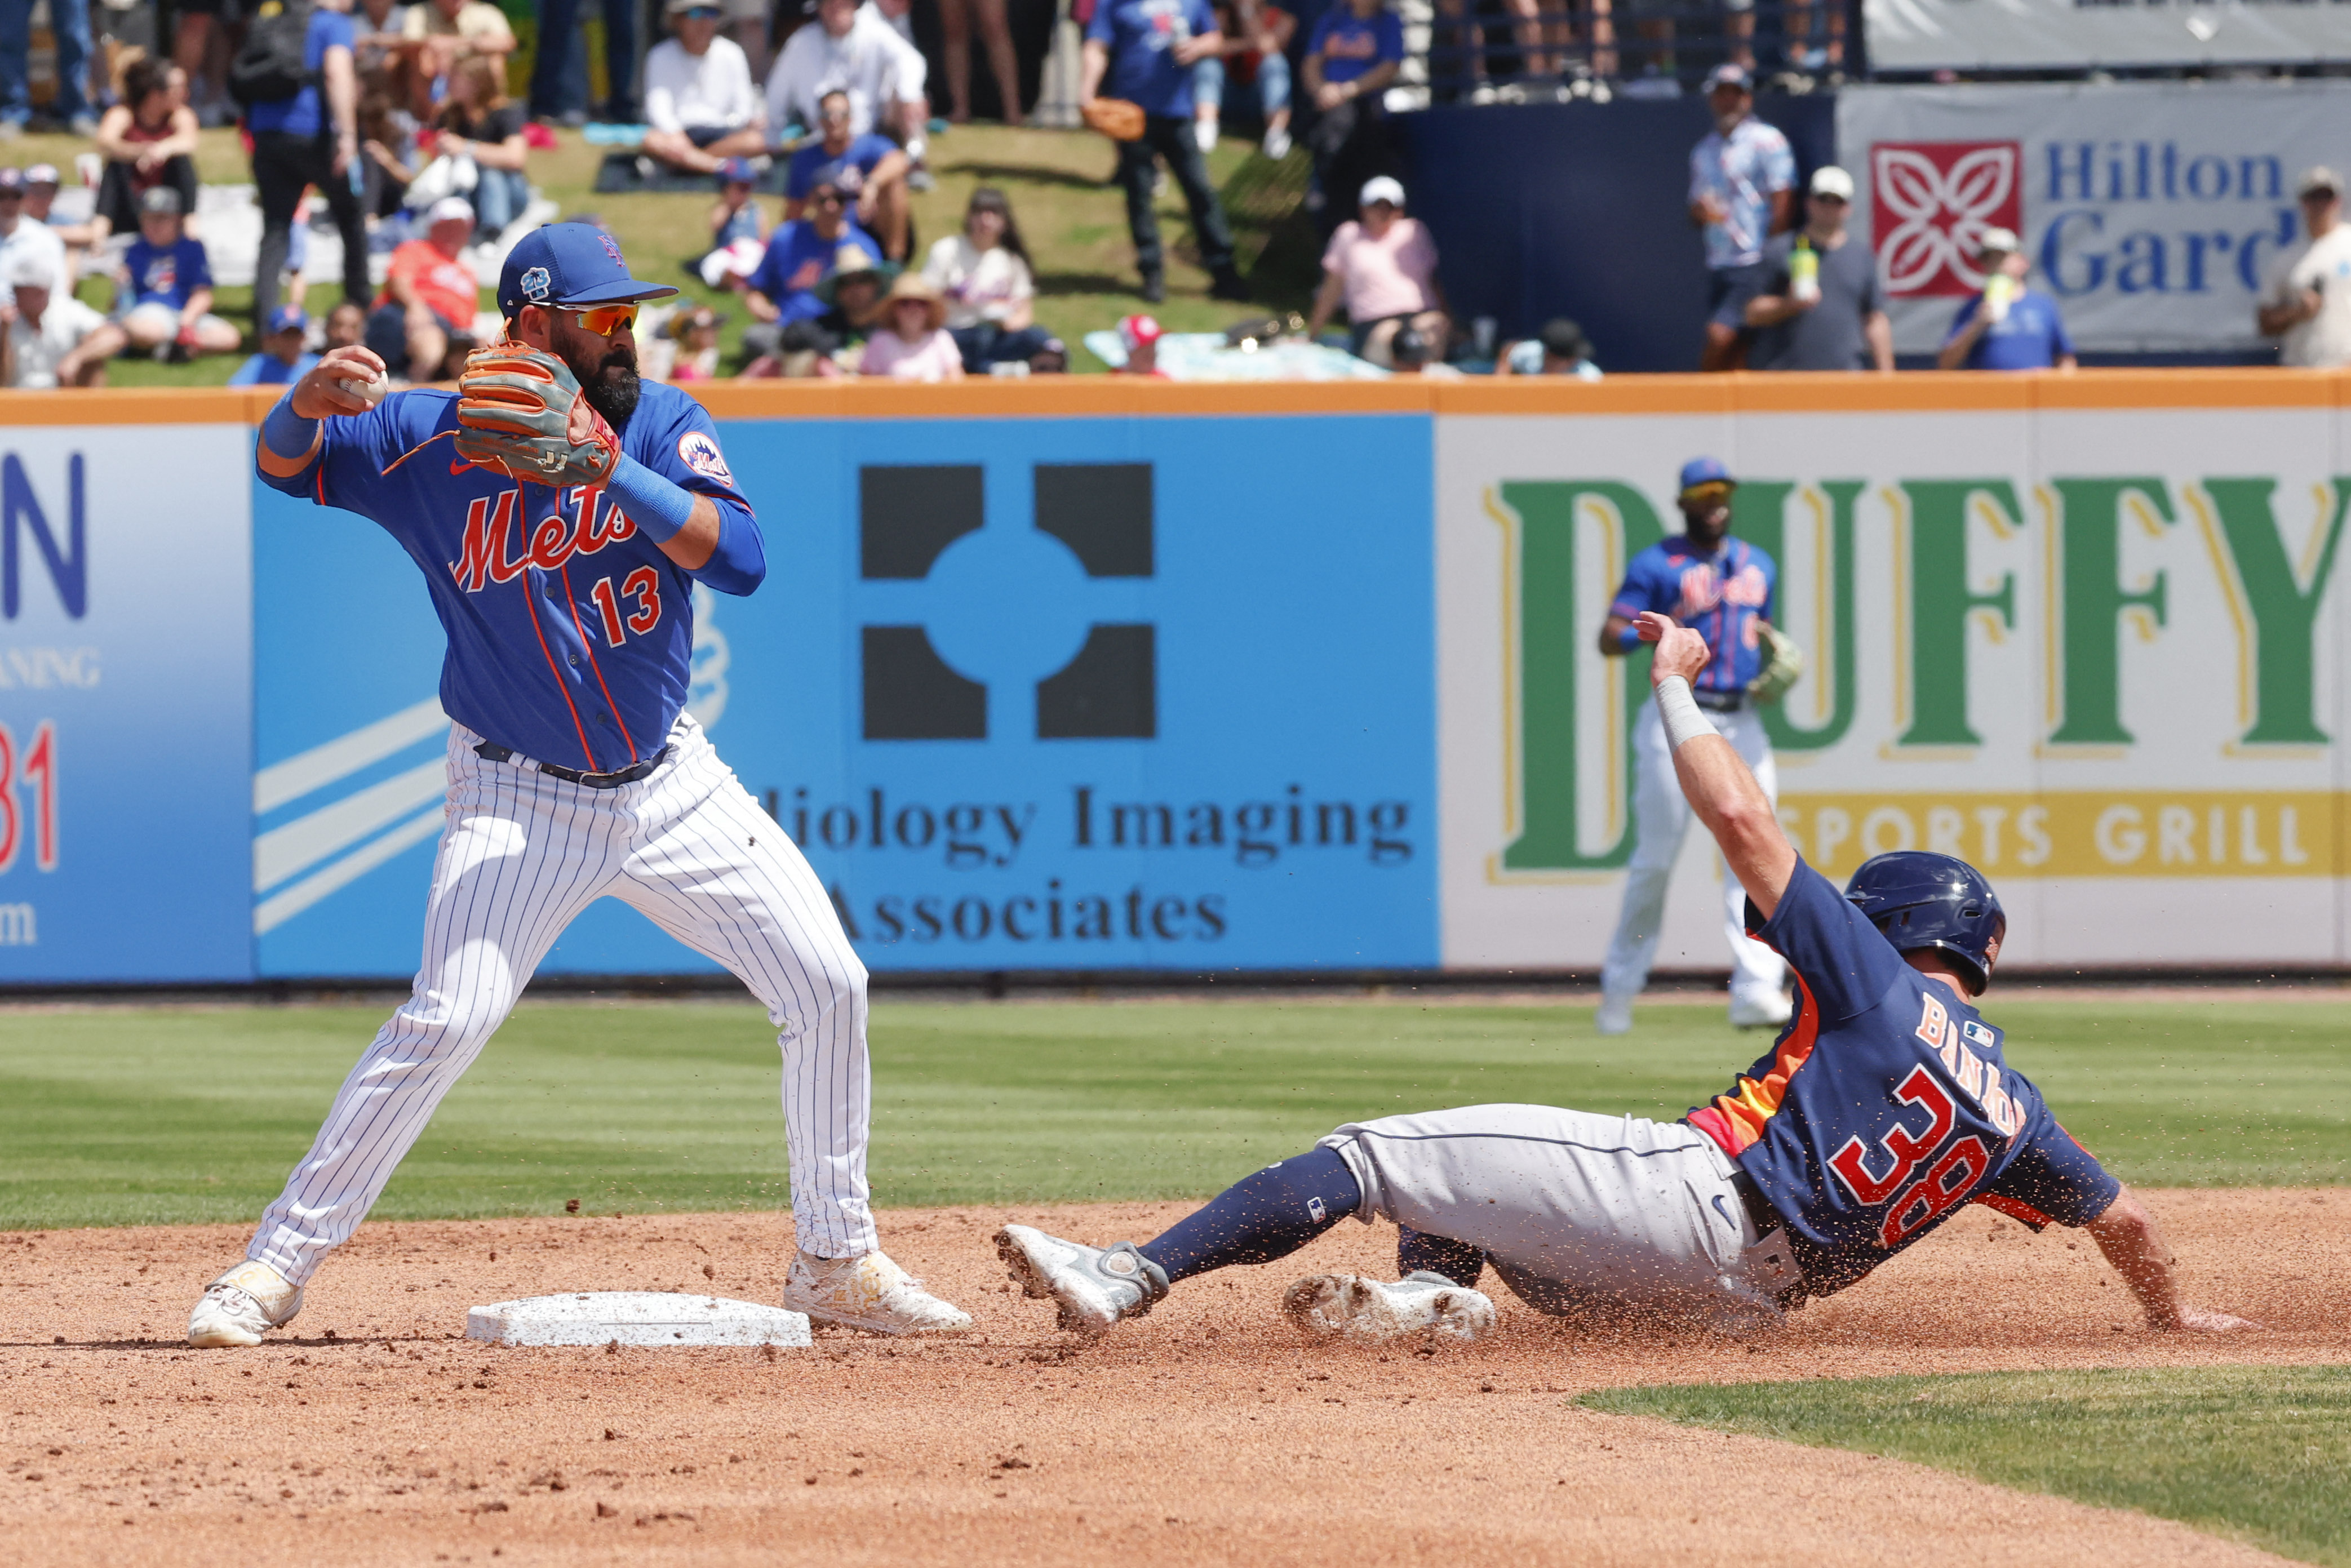 MLB: Spring Training-Houston Astros at New York Mets